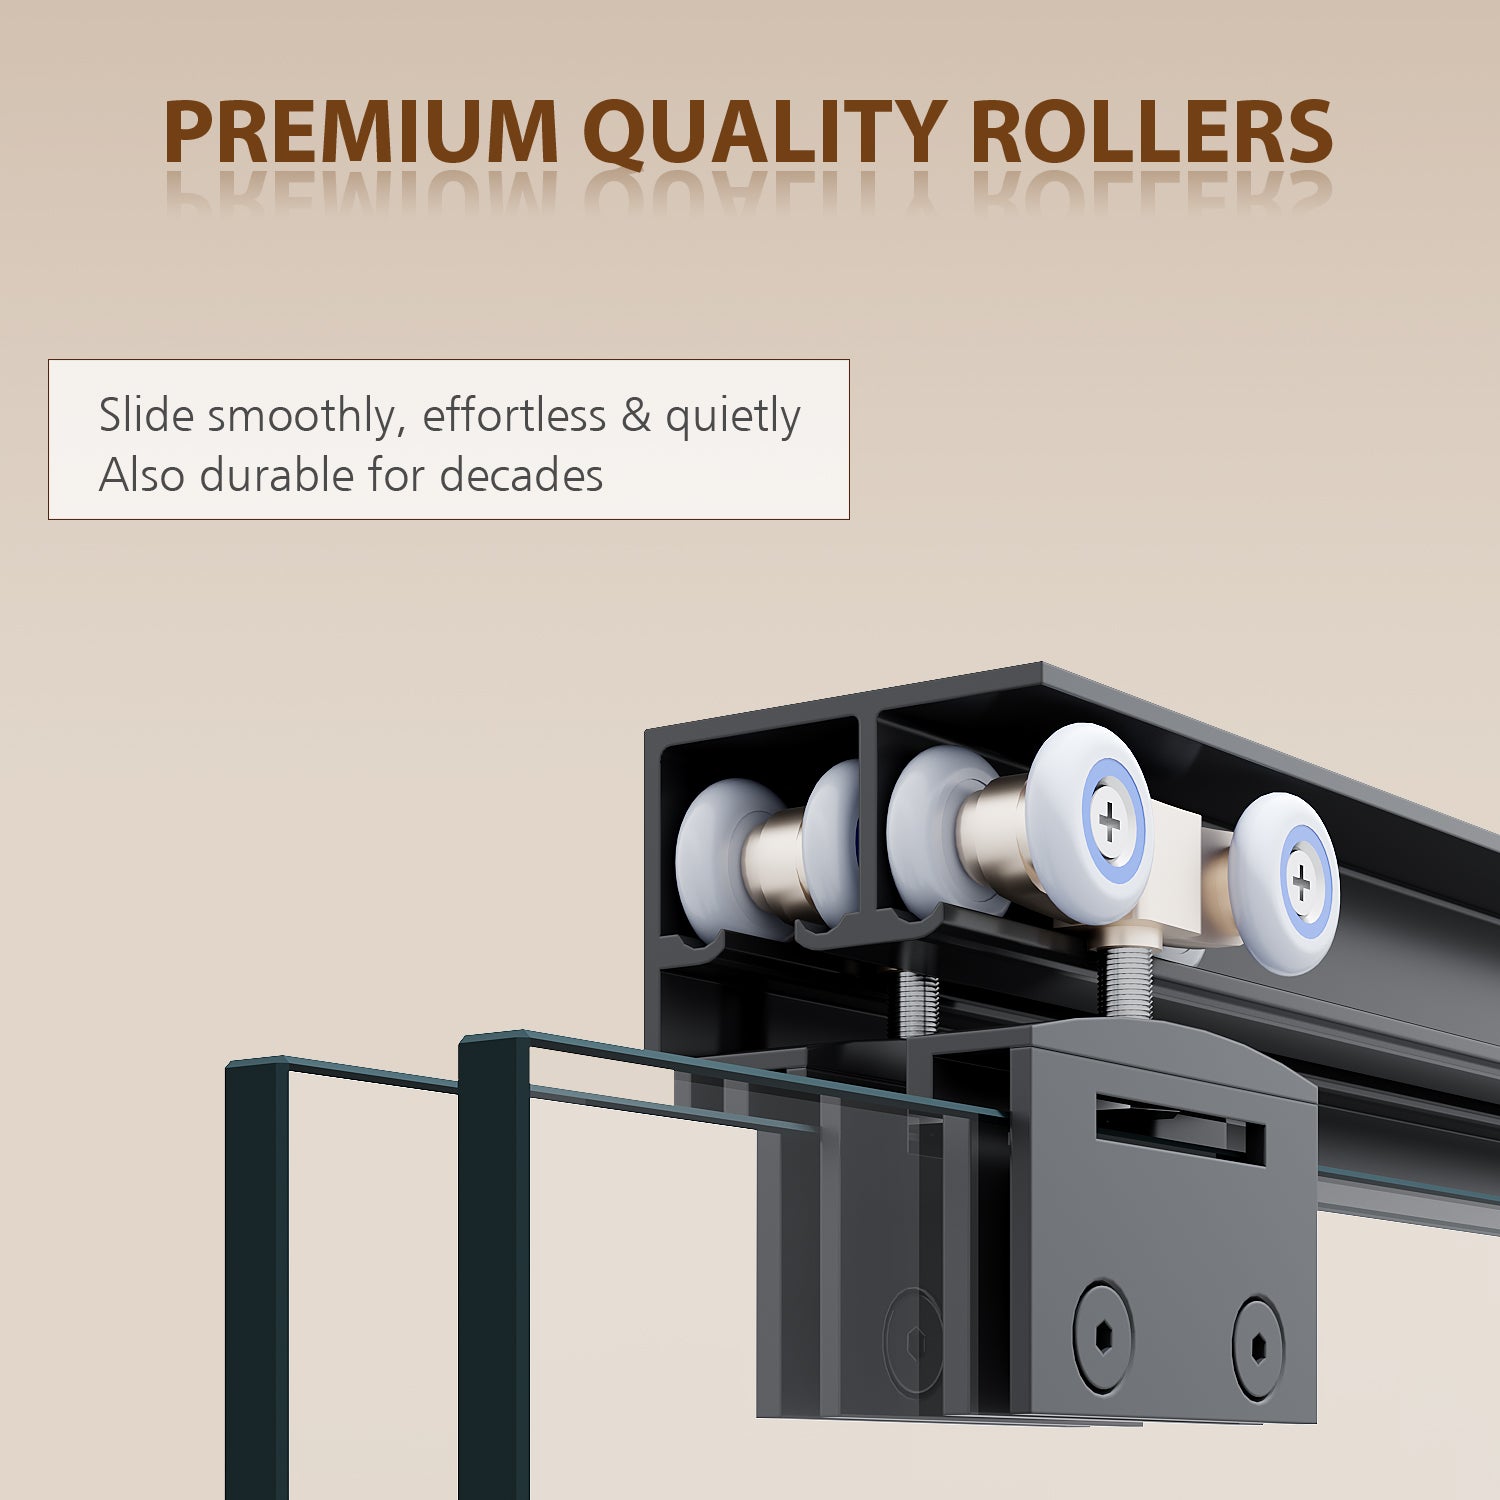 SUNNY SHOWER Sliding Door Premium Quality Rollers